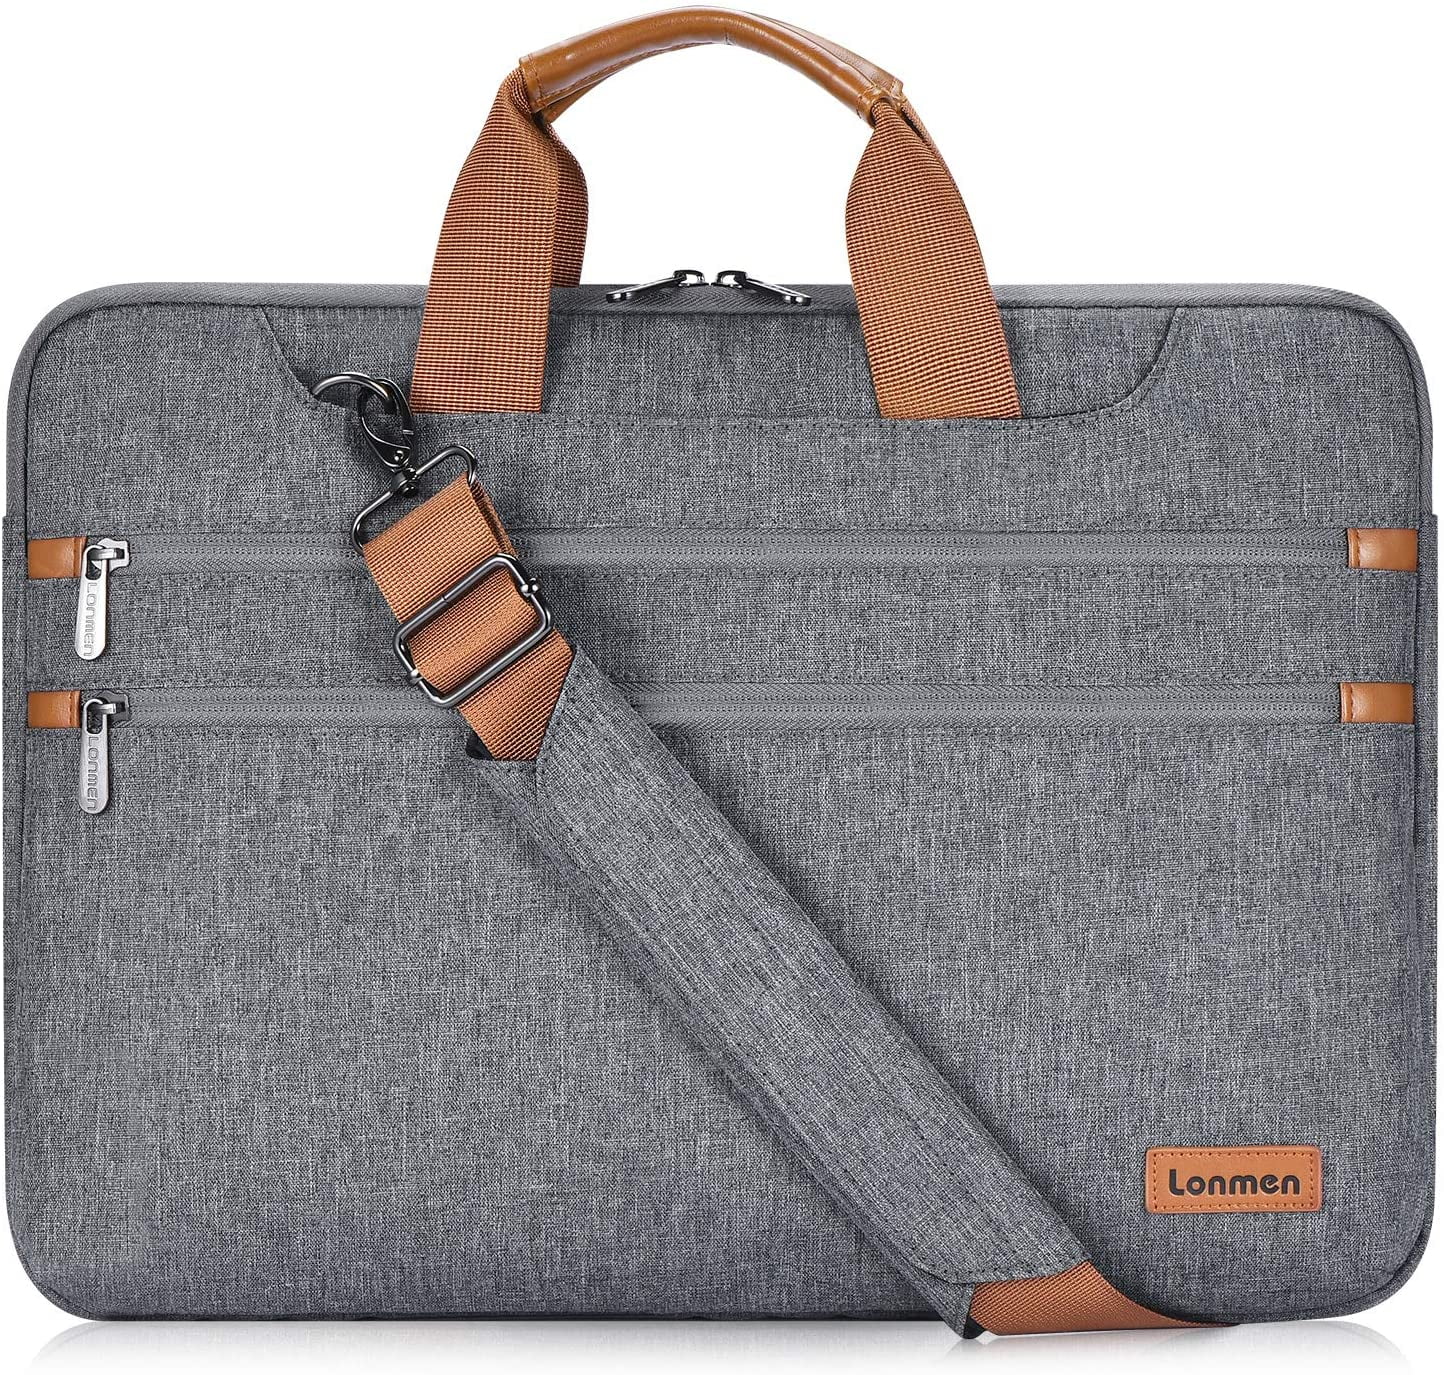 Price: 13732.00 Rs 17.3 Inch Laptop Shoulder Bag, Girls Women Laptop  Briefcase